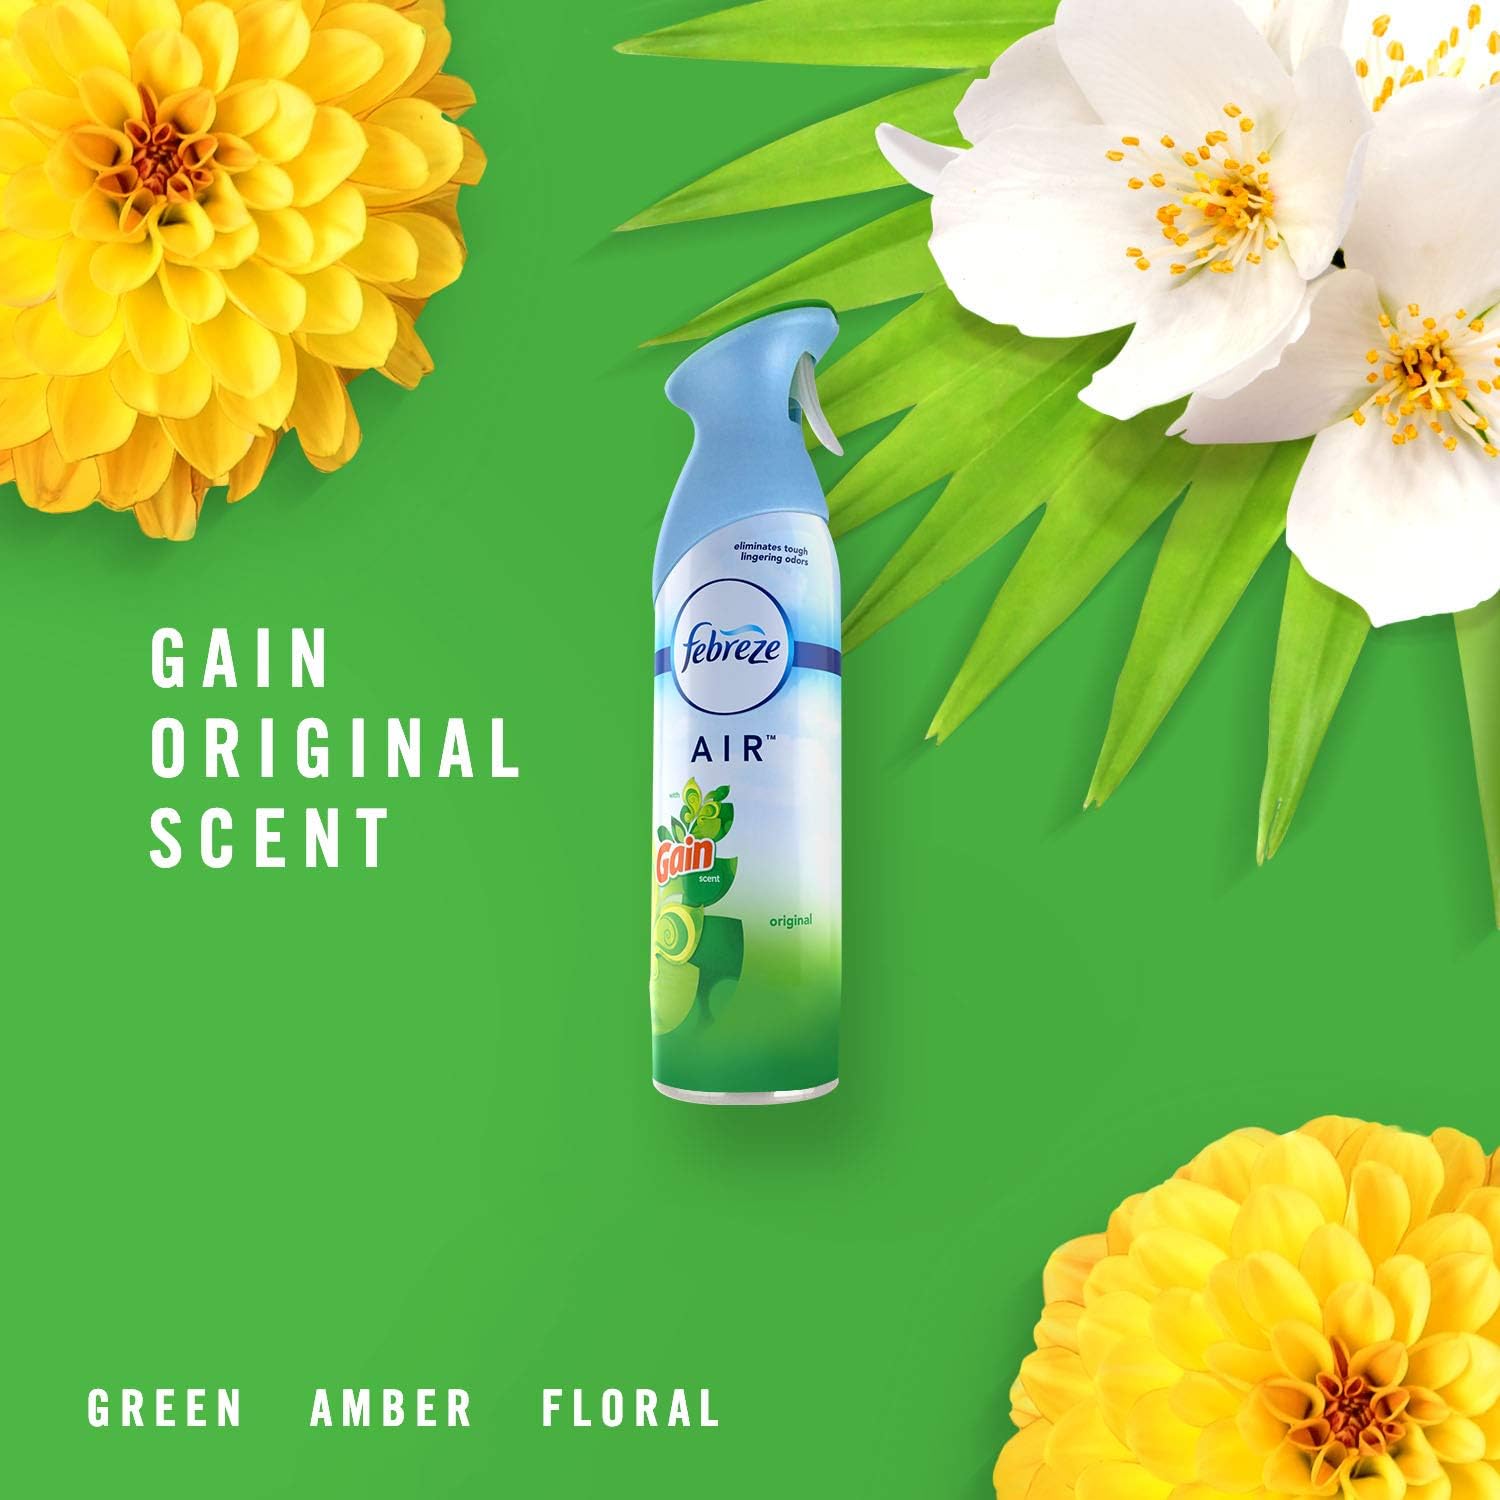 Febreze Air Freshener Spray, Odor Eliminator, Gain Original, 250 gram each, 2 count : Health & Household